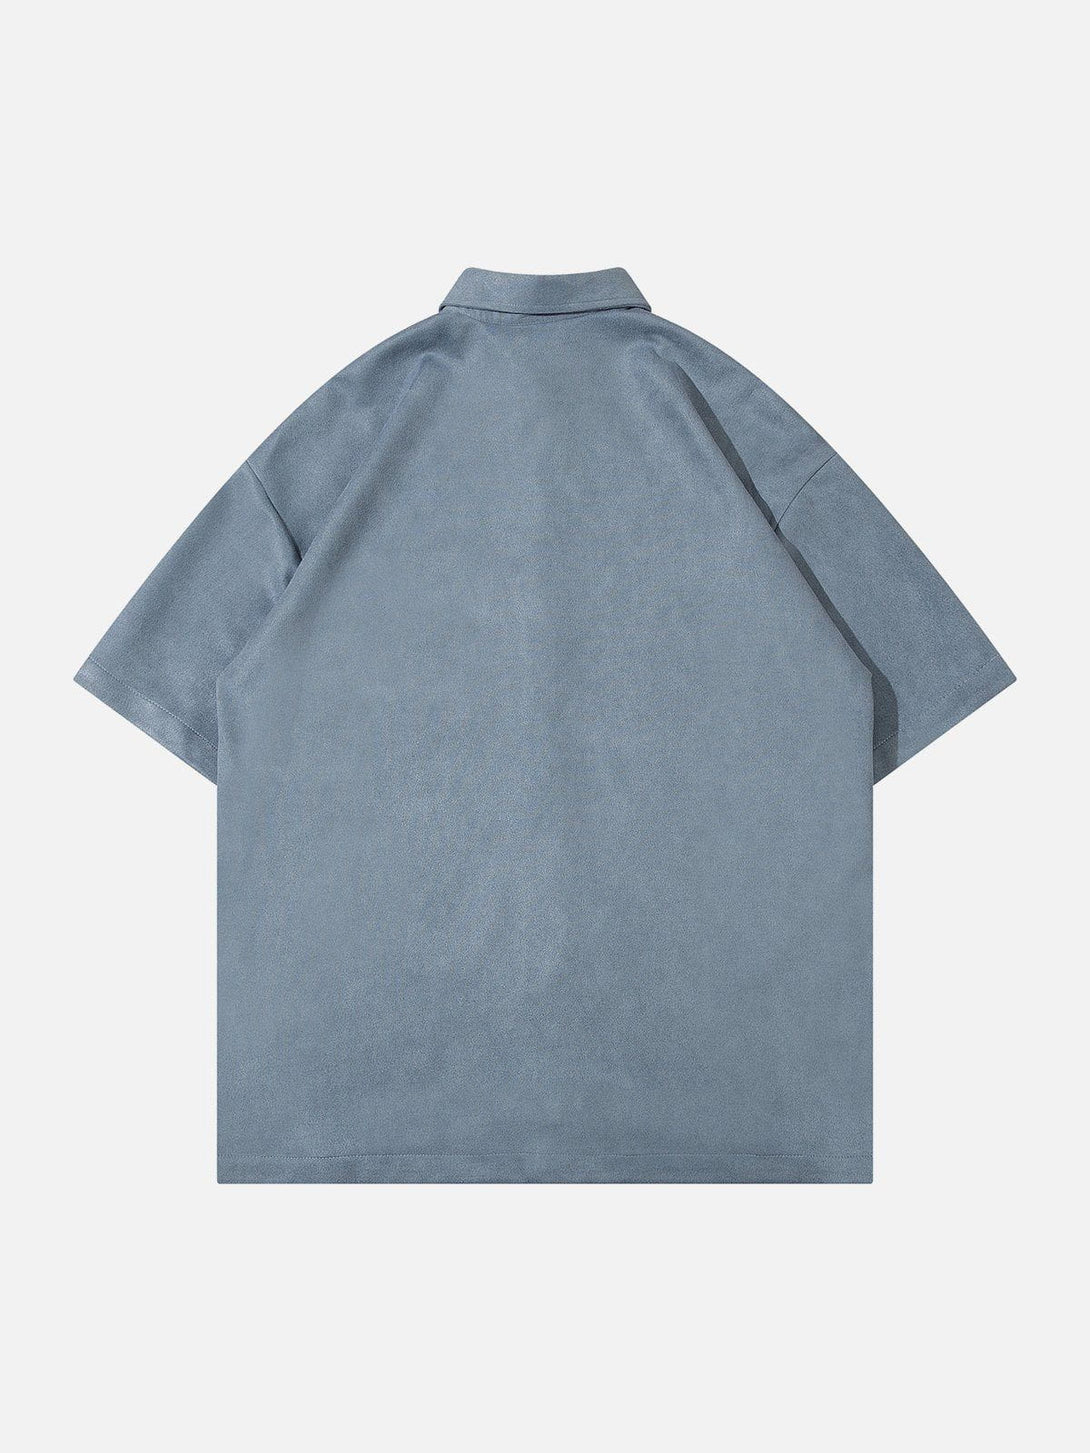 AlanBalen® - Letter Embroidery Suede Short Sleeve Shirts AlanBalen